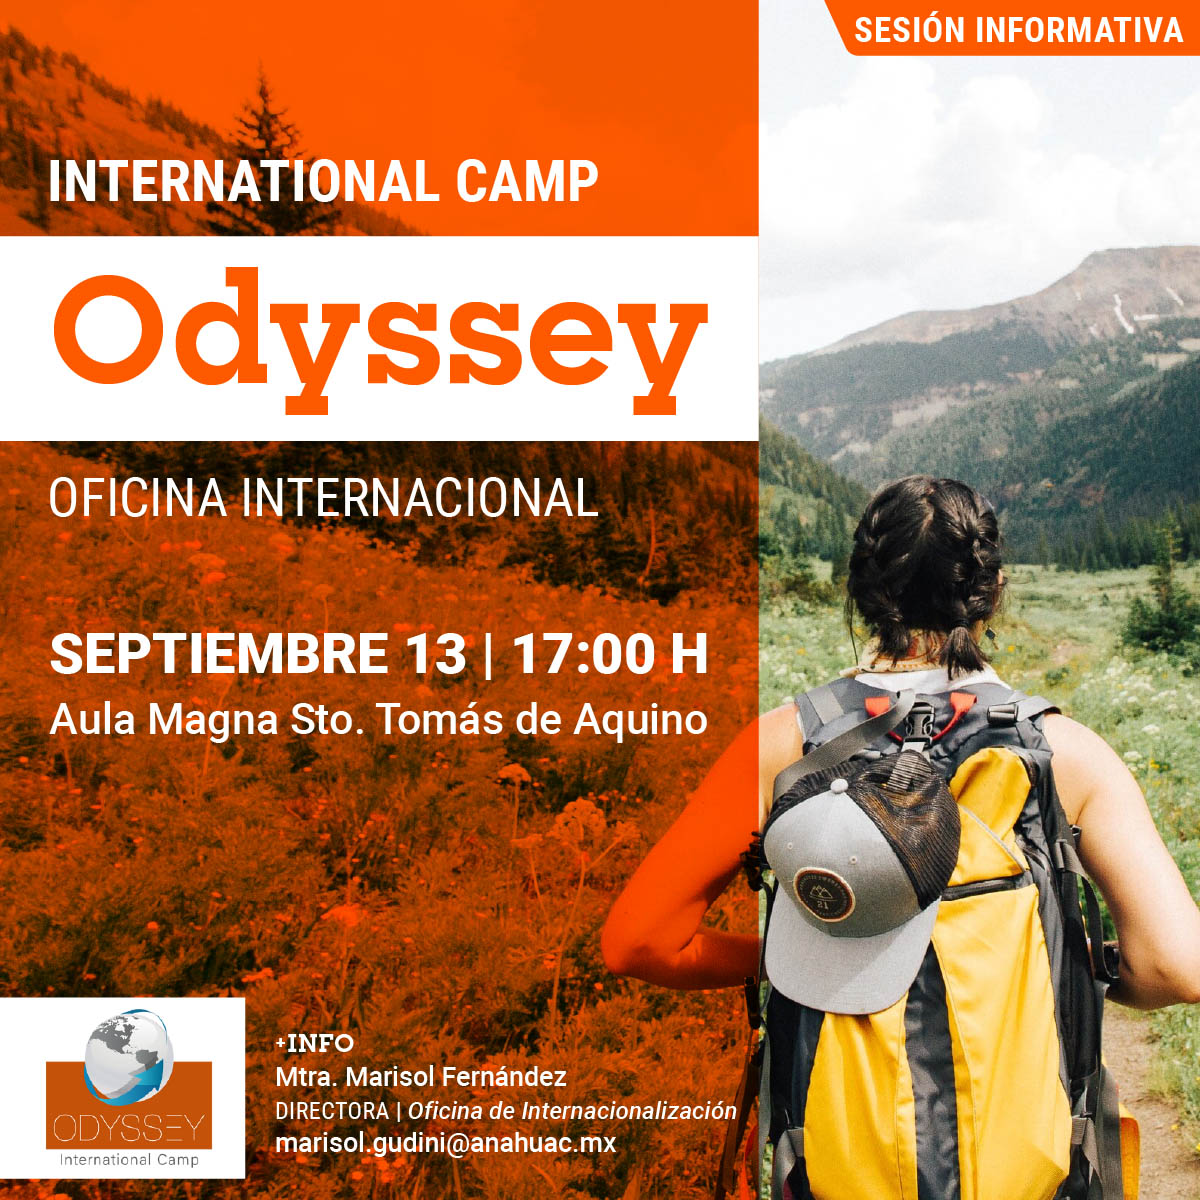 Odyssey International Camp